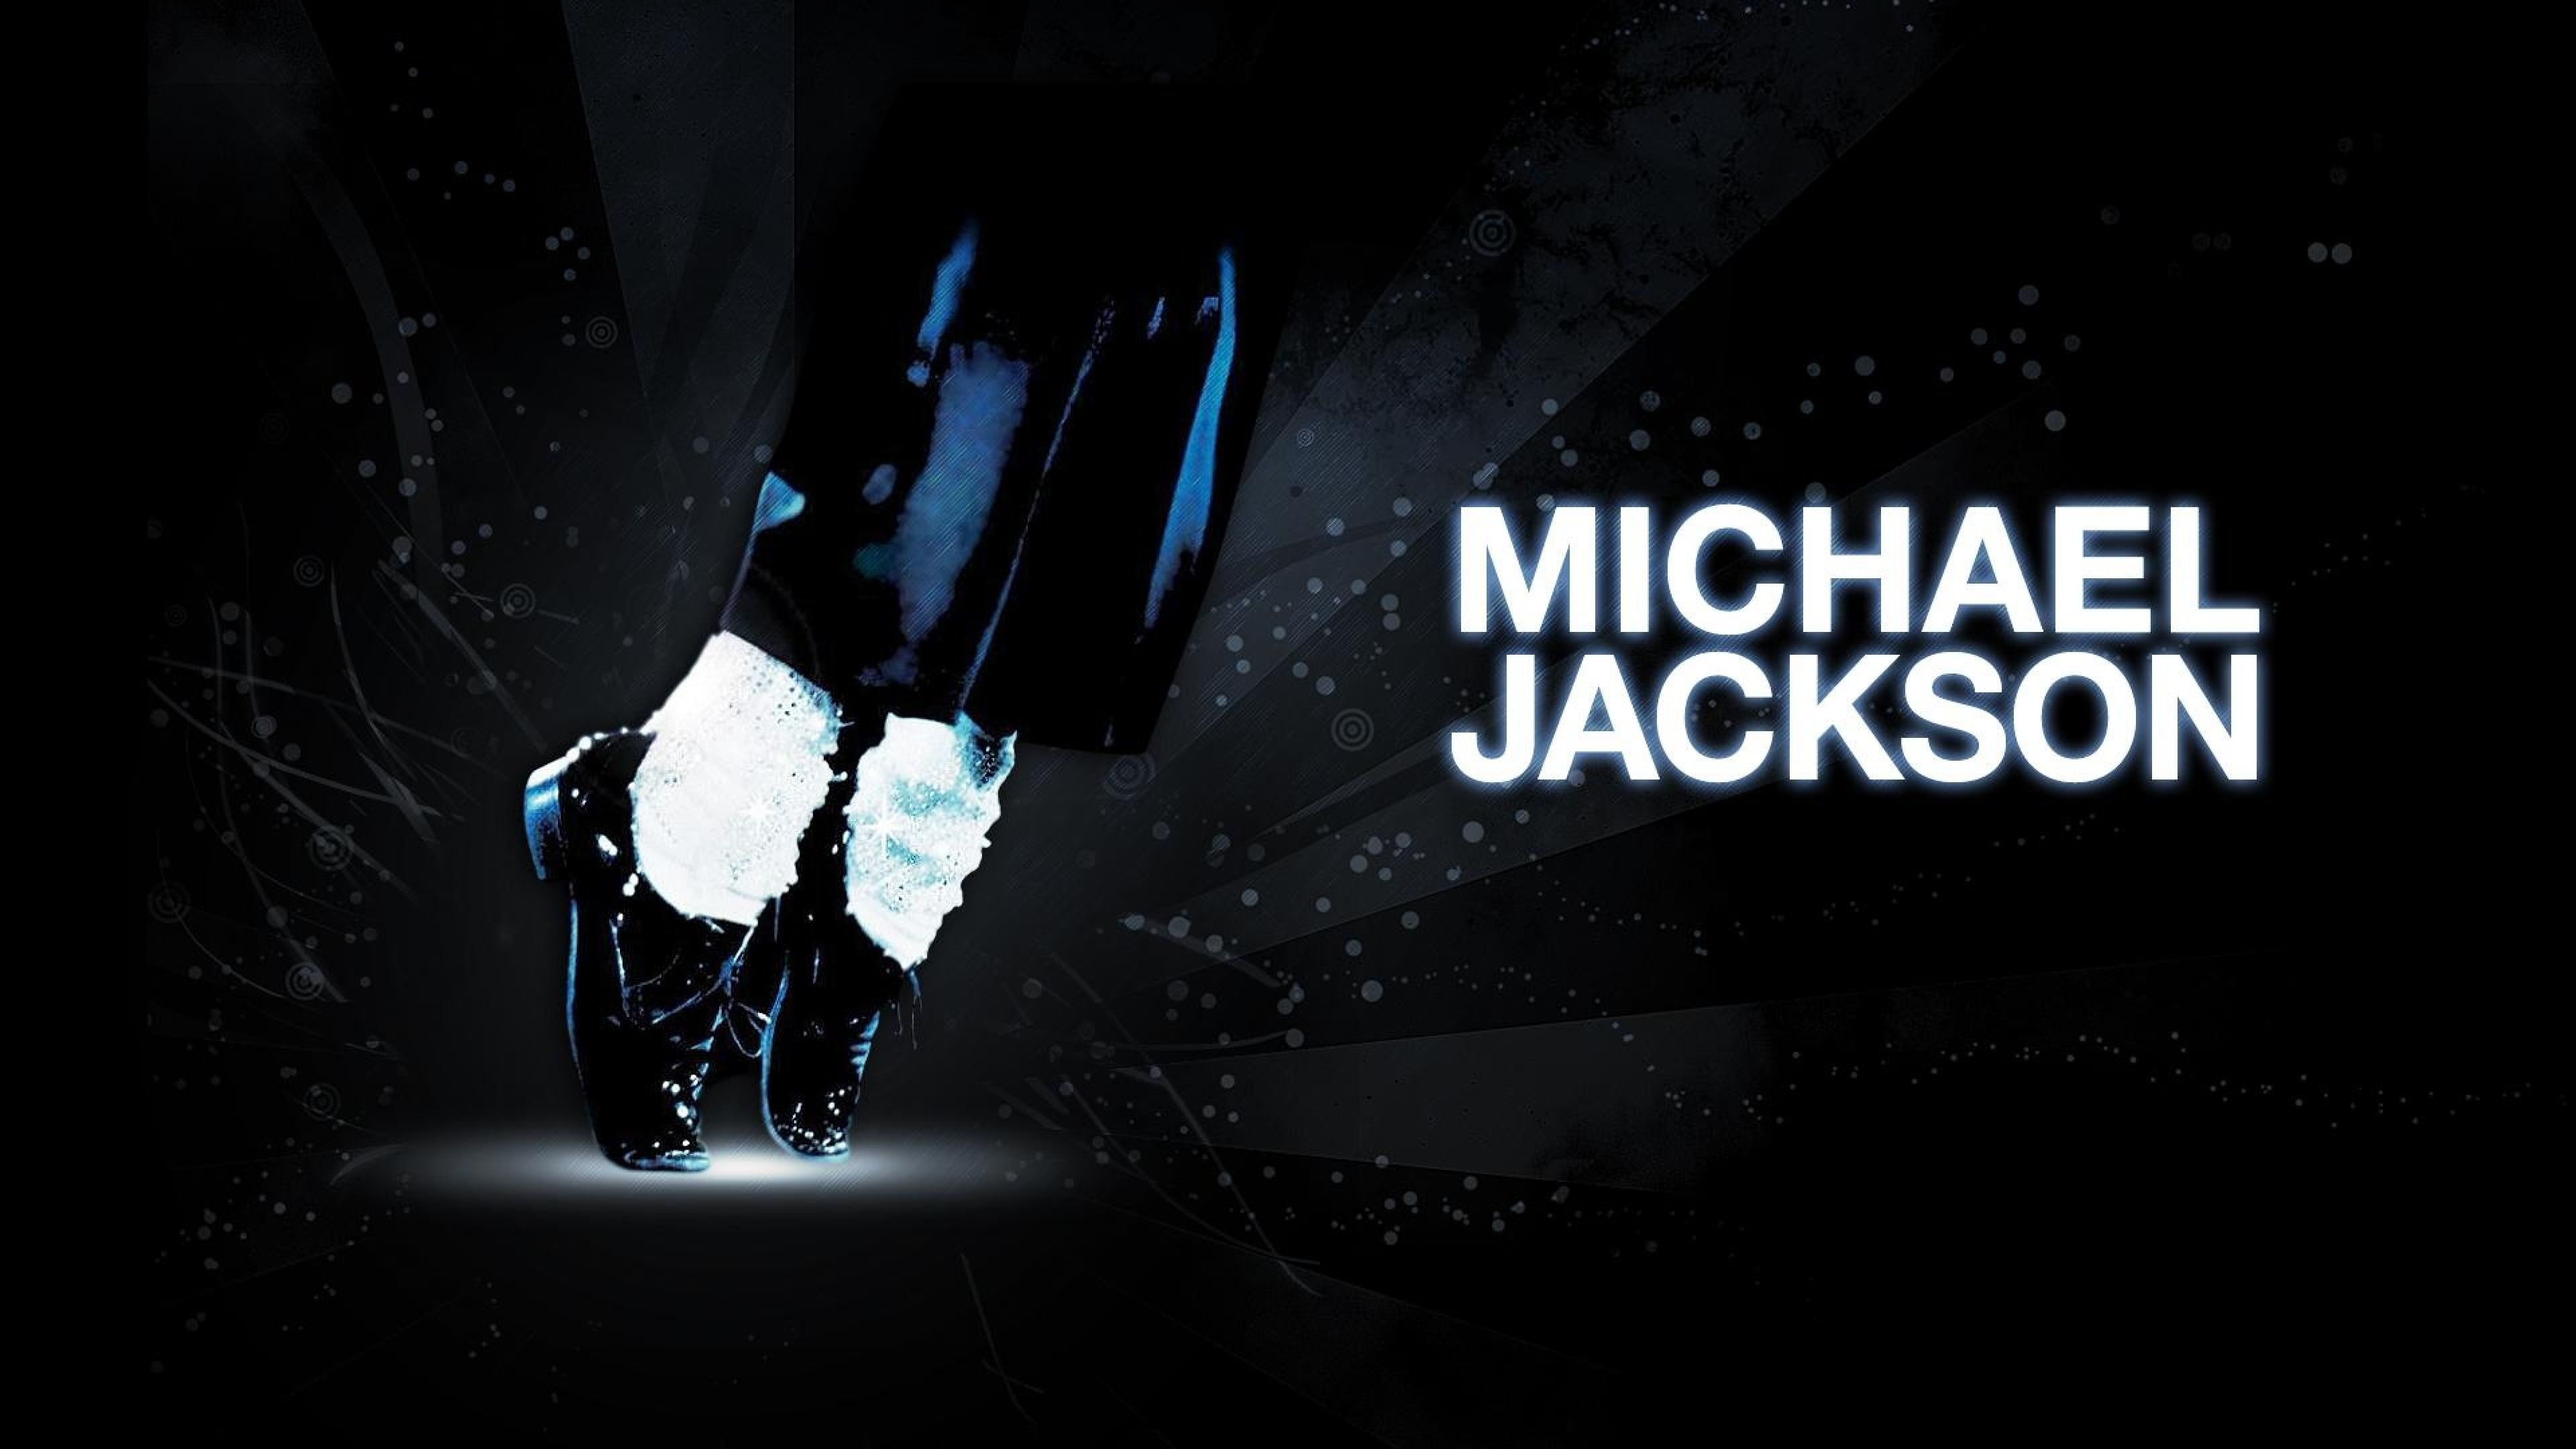 Moonwalk Dance: Michael Jackson, An American singer, songwriter, and dancer, A four-decade career. 3840x2160 4K Wallpaper.